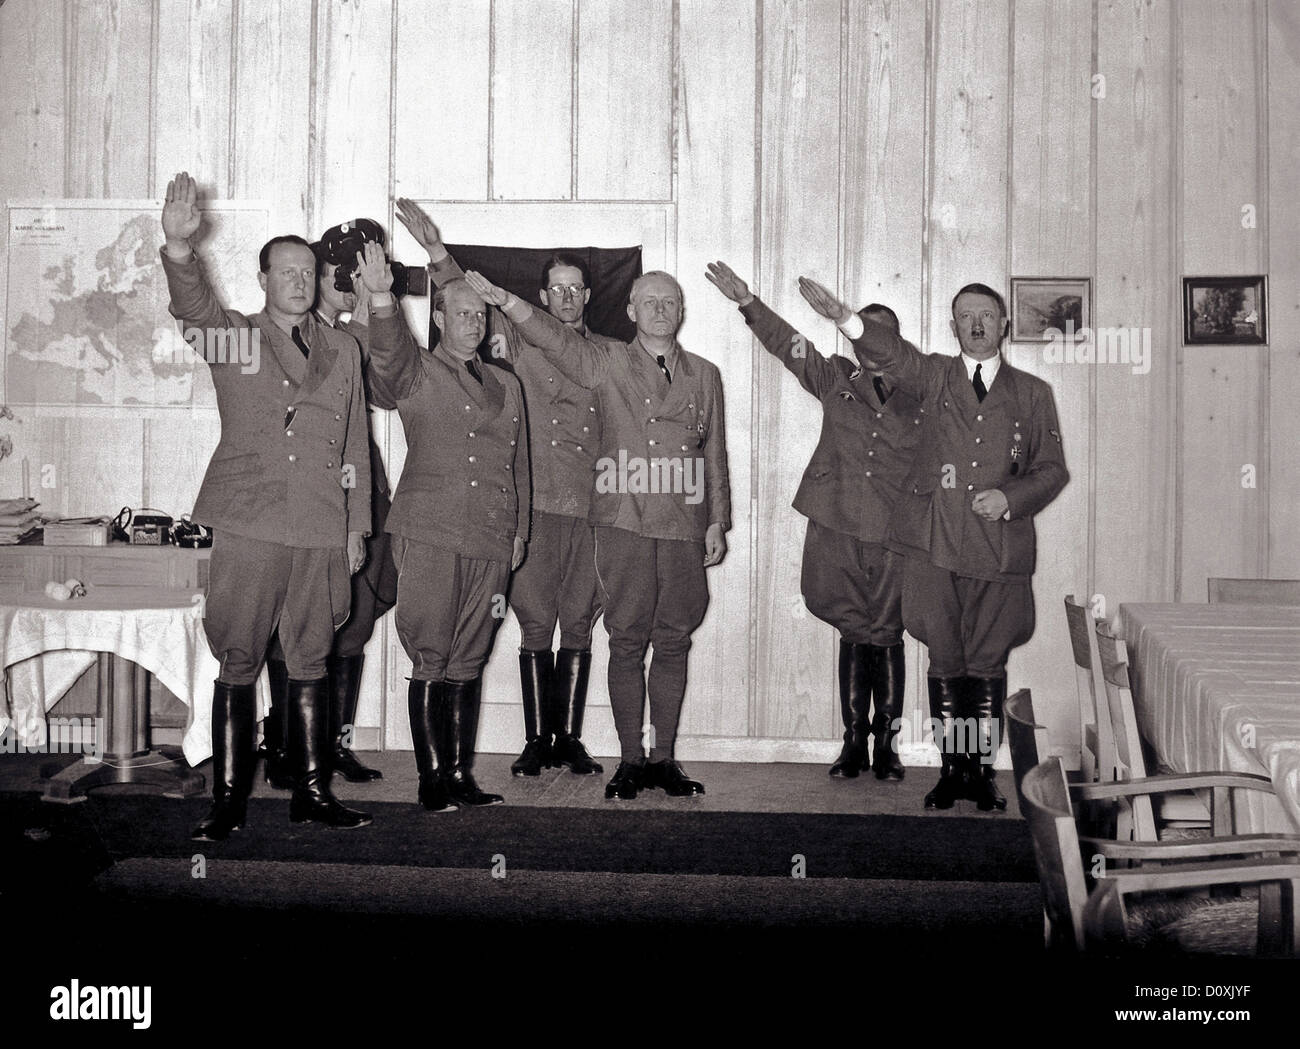 Adolf Hitler, les visiteurs, le Berghof, présentant, Nazi, Hitler, Salute, Heil Hitler, Führer, Berchtesgaden, Allemagne, 1942, la seconde guerre mondiale Banque D'Images